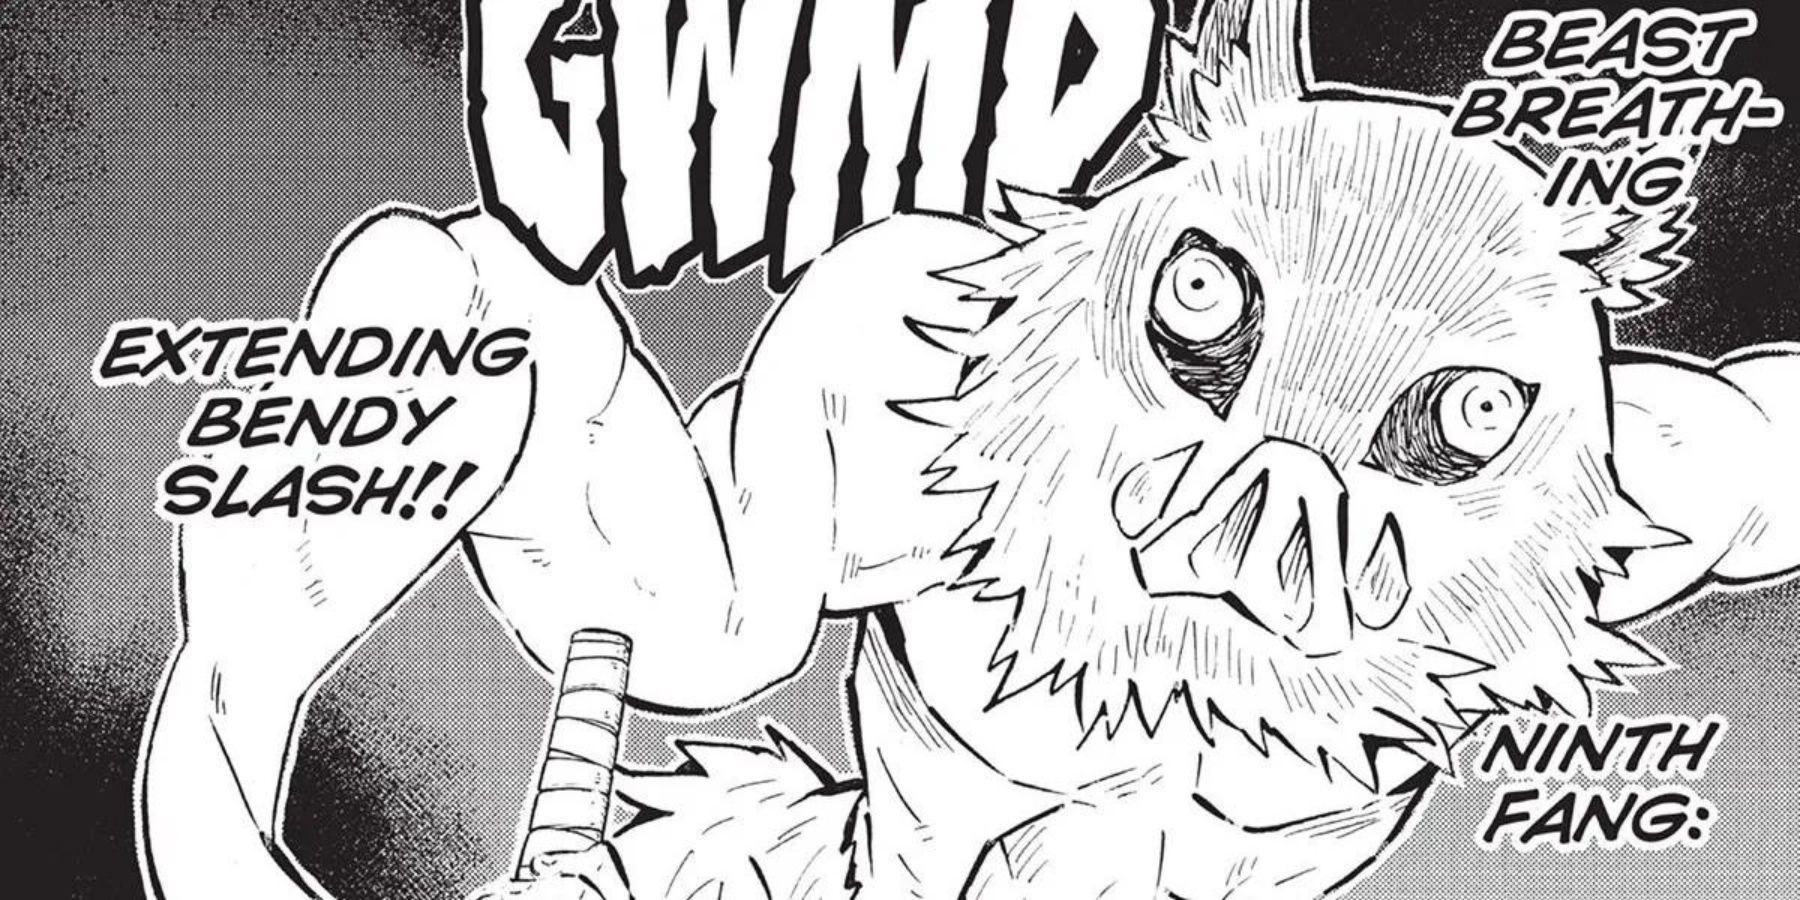 Demon Slayer Inosuke Hashibira Beast Breathing_= Ninth Fang - Extending Bendy Slash